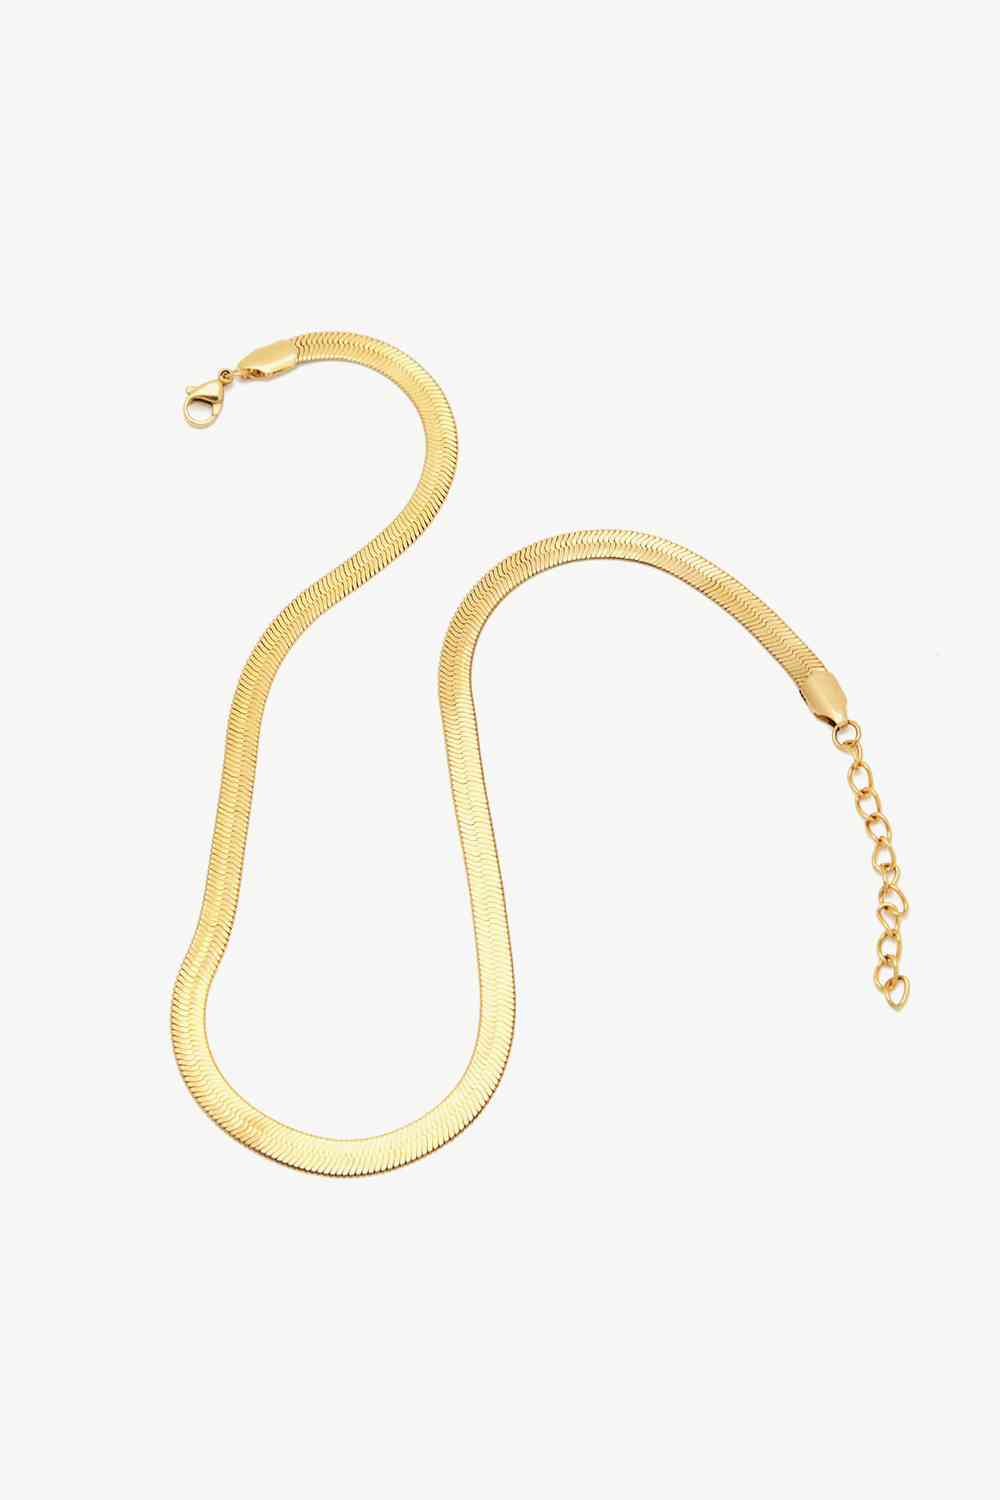 Minimalist Herringbone Chain Necklace